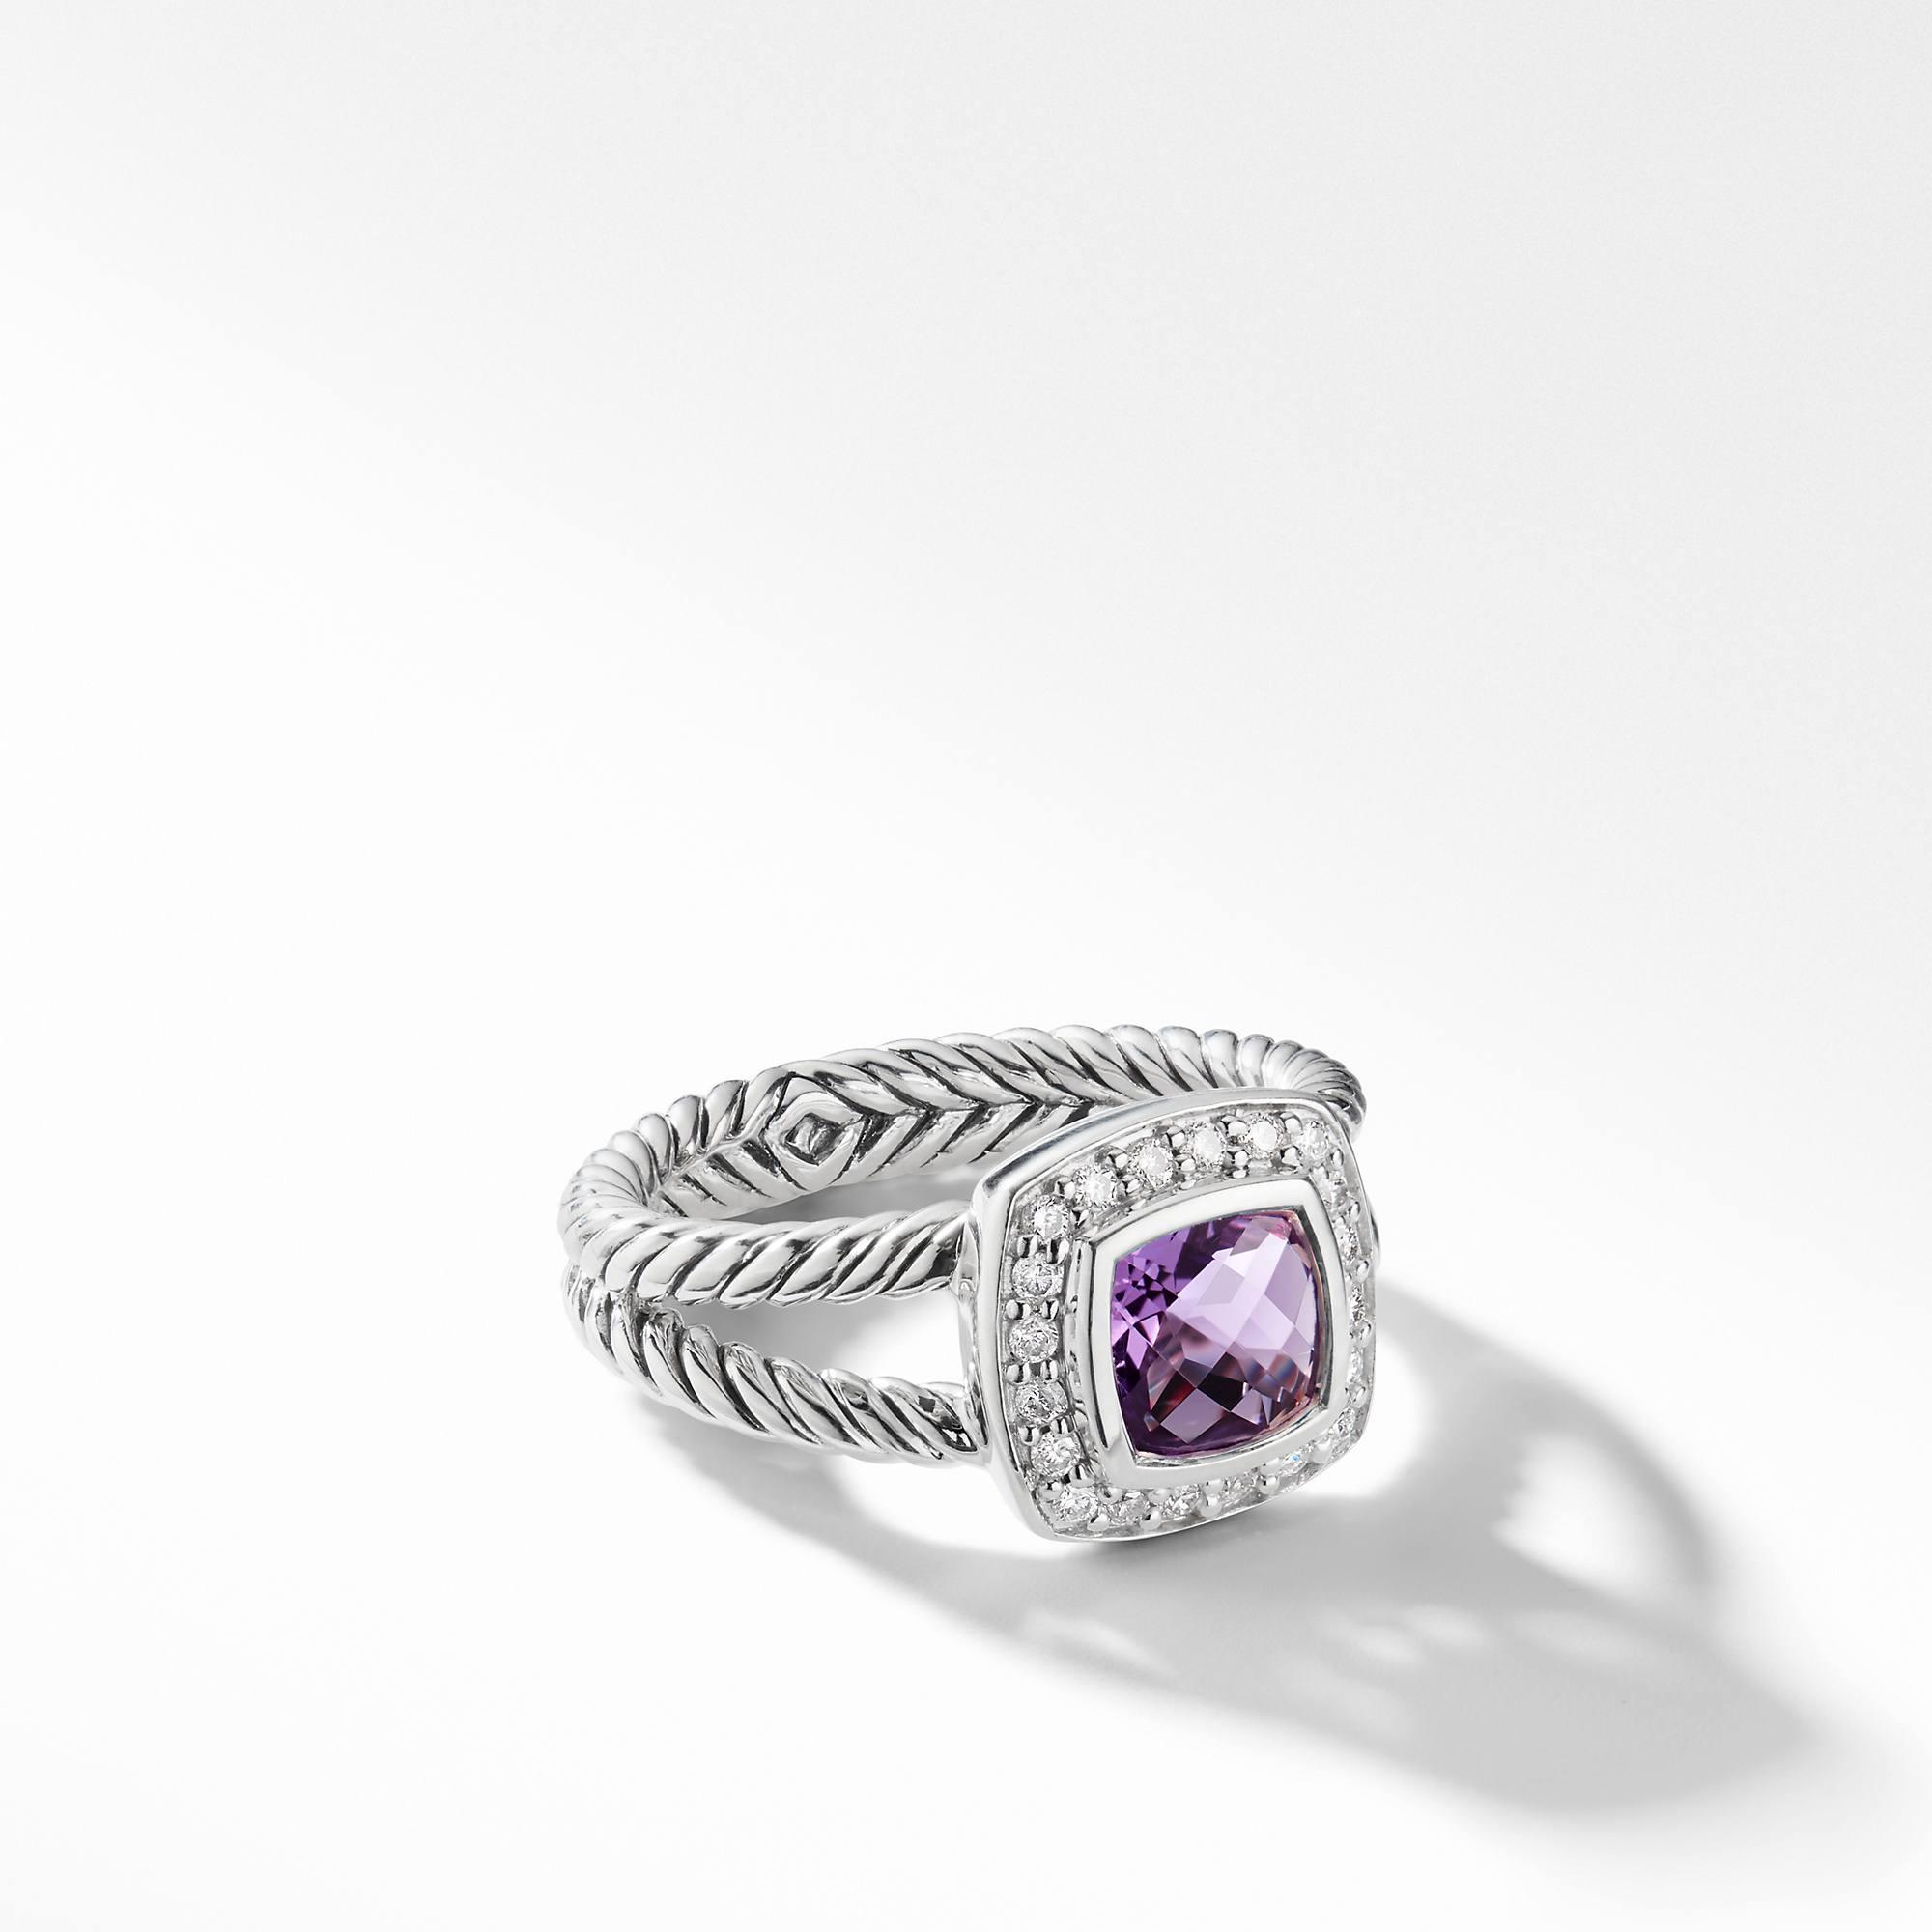 David Yurman Petite Albion Ring with Amethyst and Diamonds, size 6